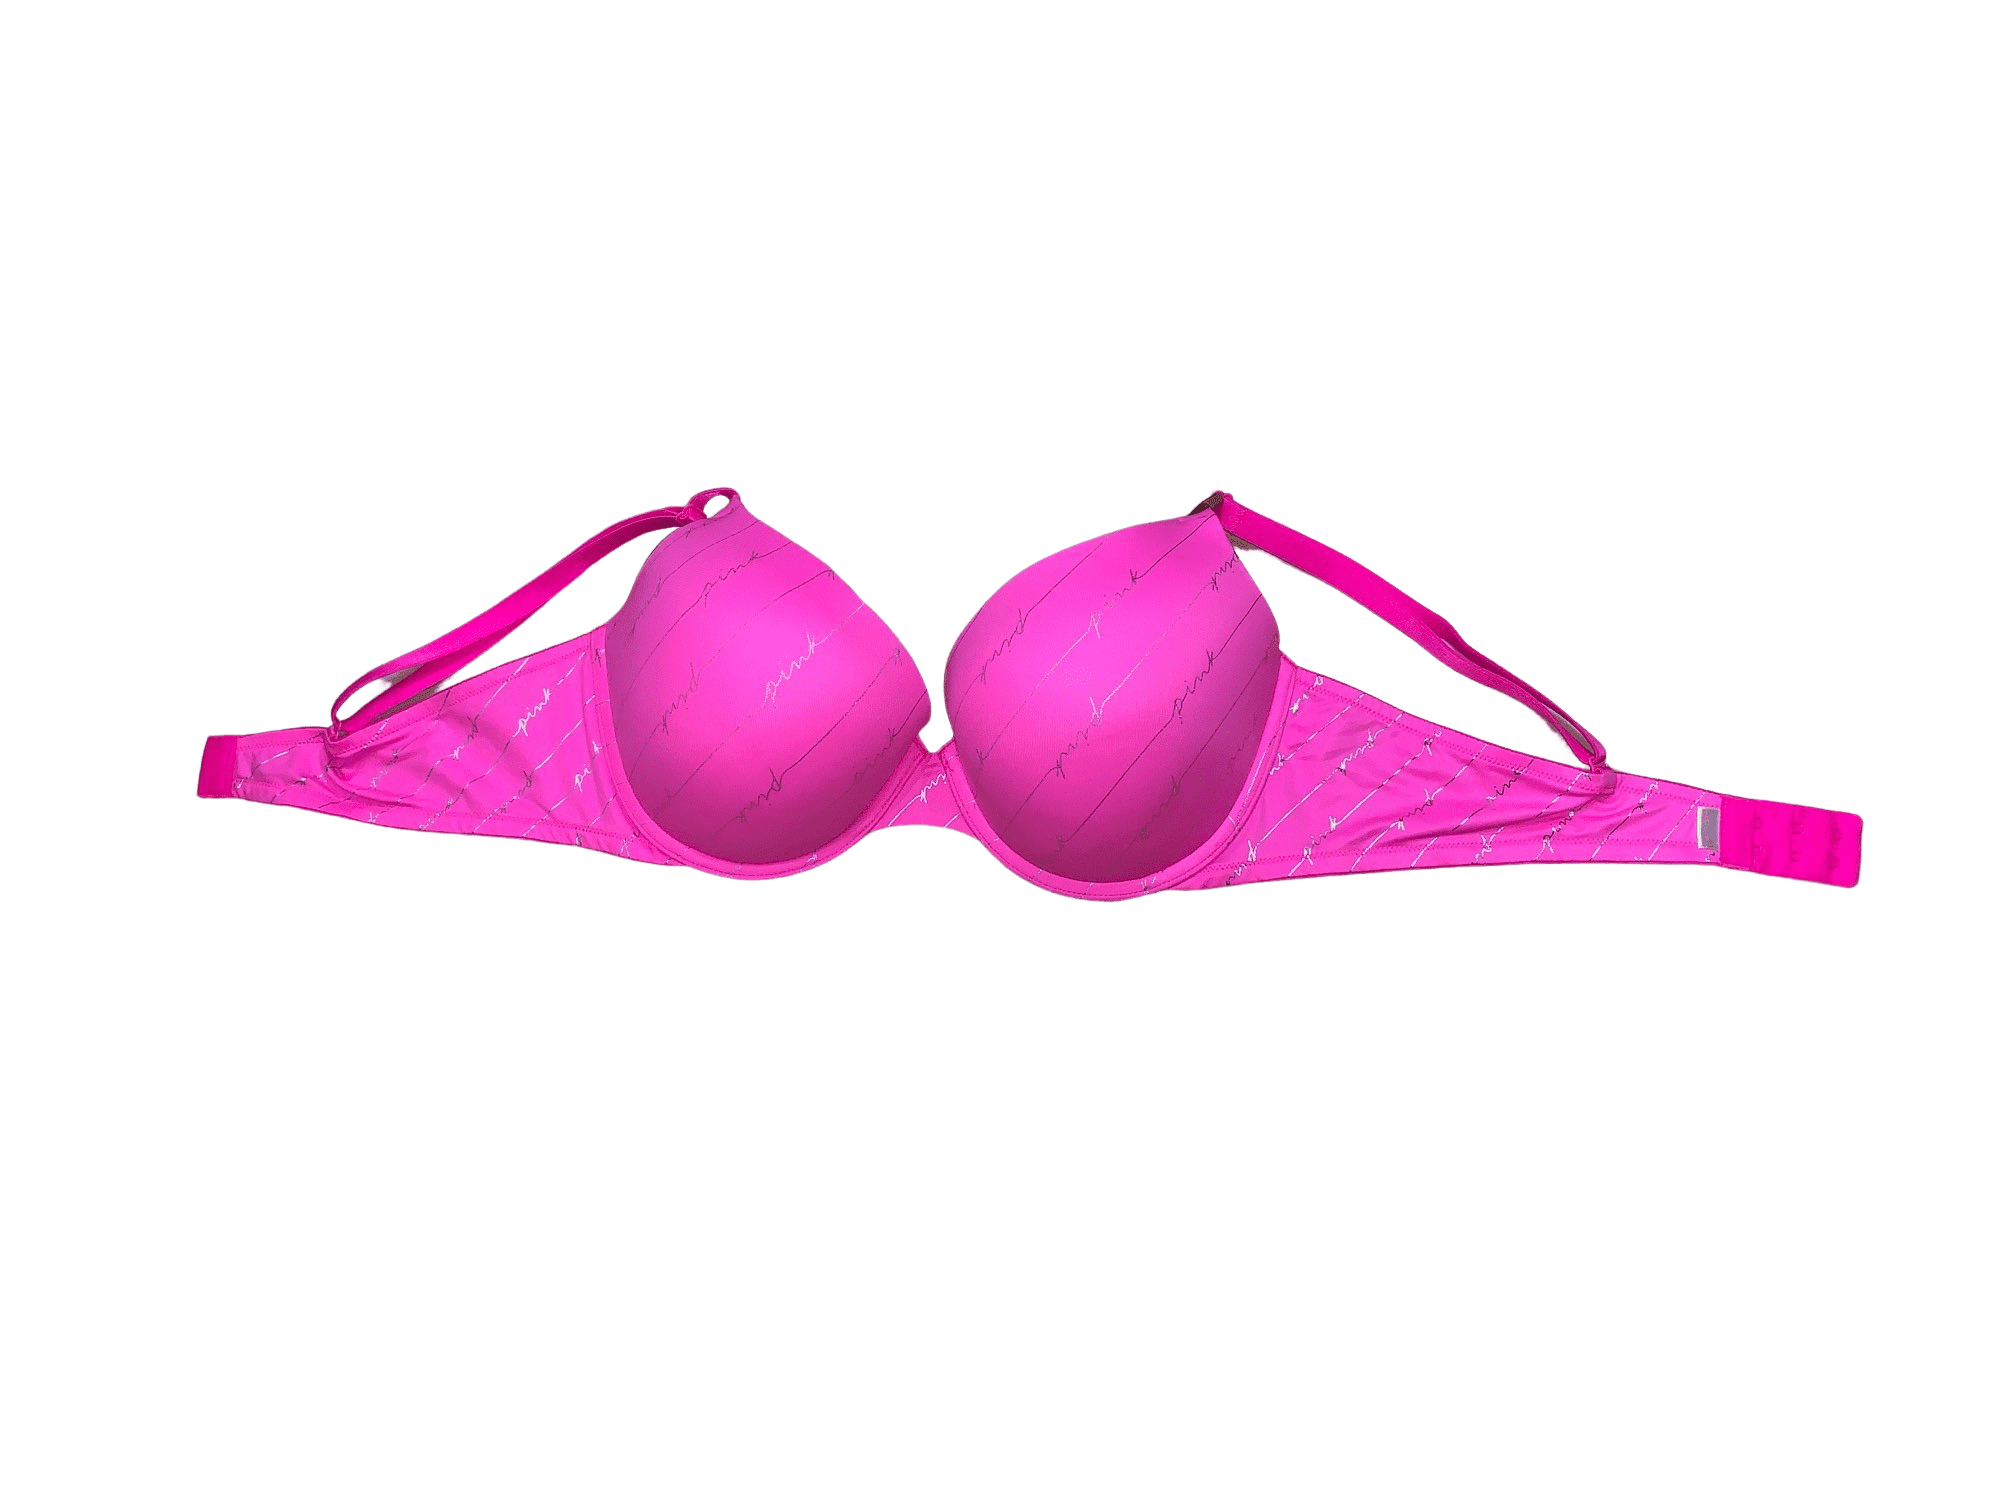 Brand new Victoria Secret Pink bra 32A  Victoria secret pink bras, Pink  bra, Victoria secret pink